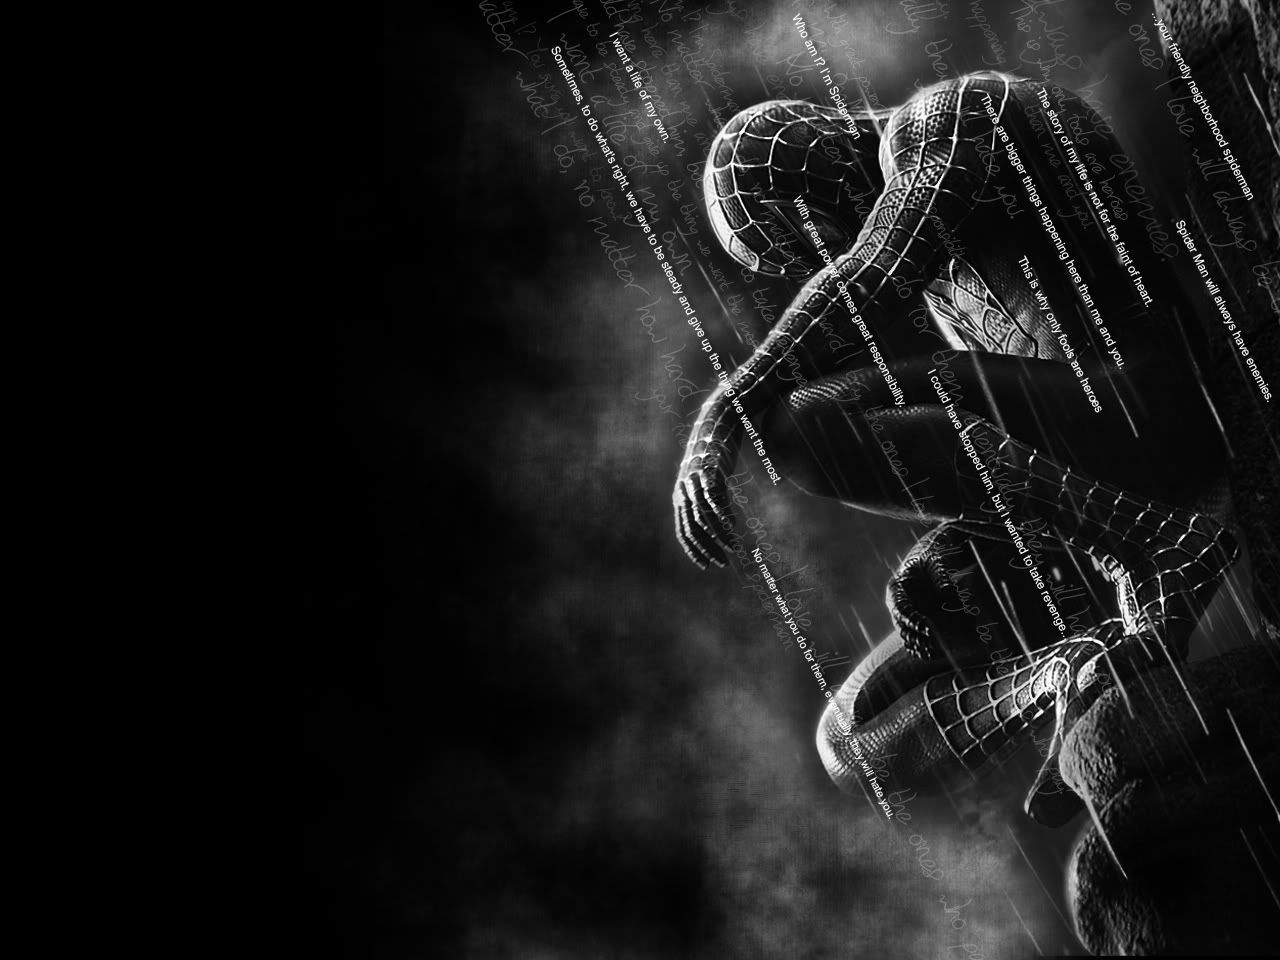 Spider Man HD desktop wallpaper, High Definition, Fullscreen 1280×960 Spiderman Pics W. Black wallpaper iphone dark, Spiderman picture, Black wallpaper iphone